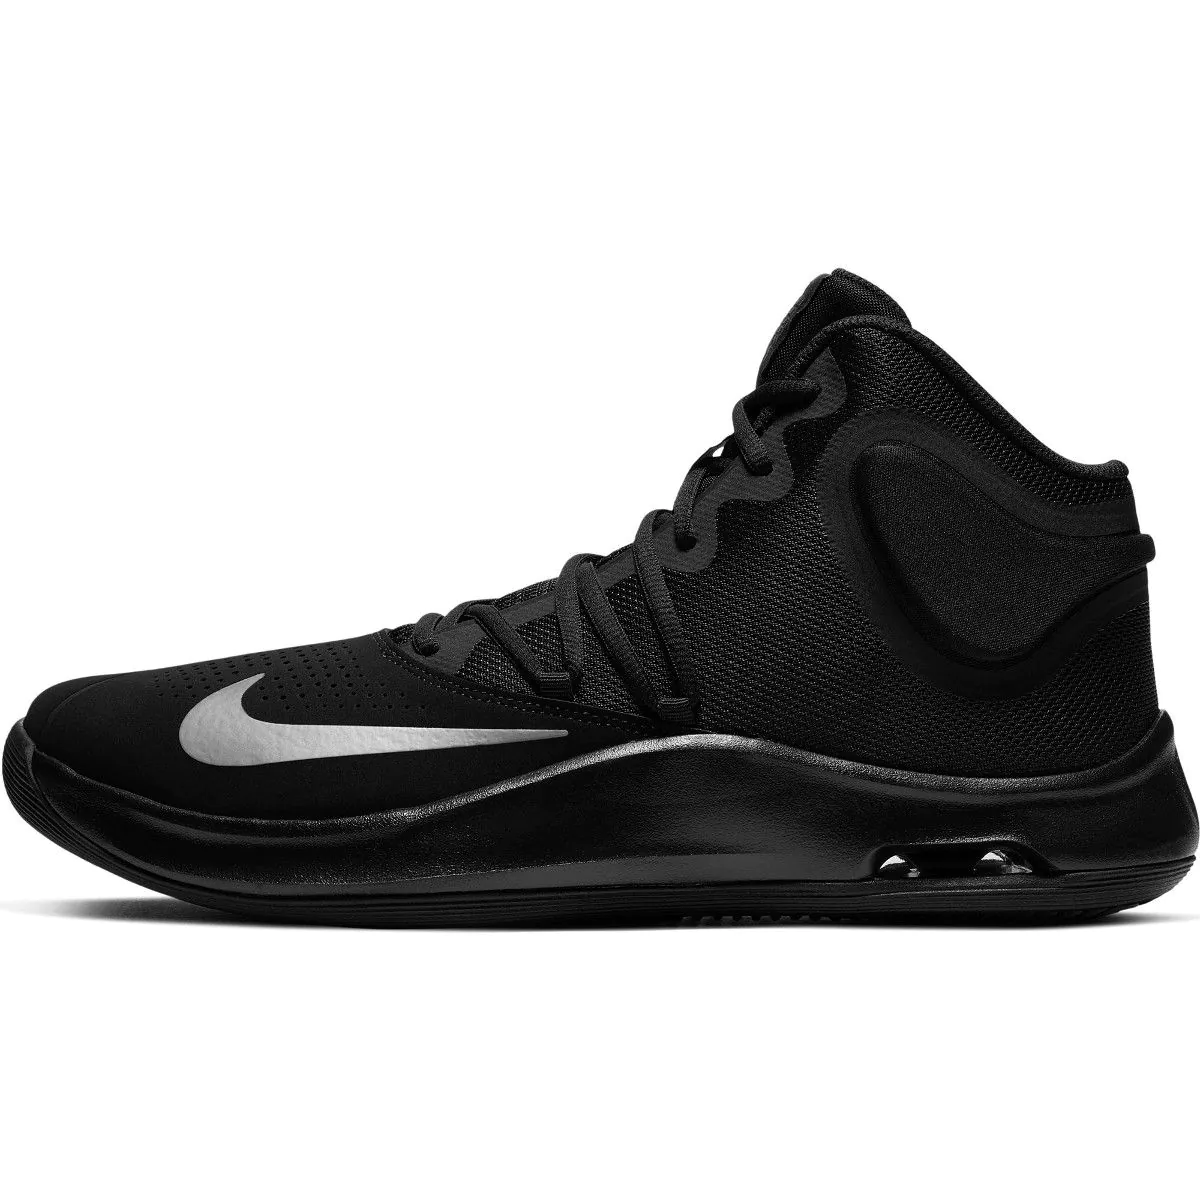 Nike Air Versitile IV NBK Men's Basketball Shoes CJ6703-001